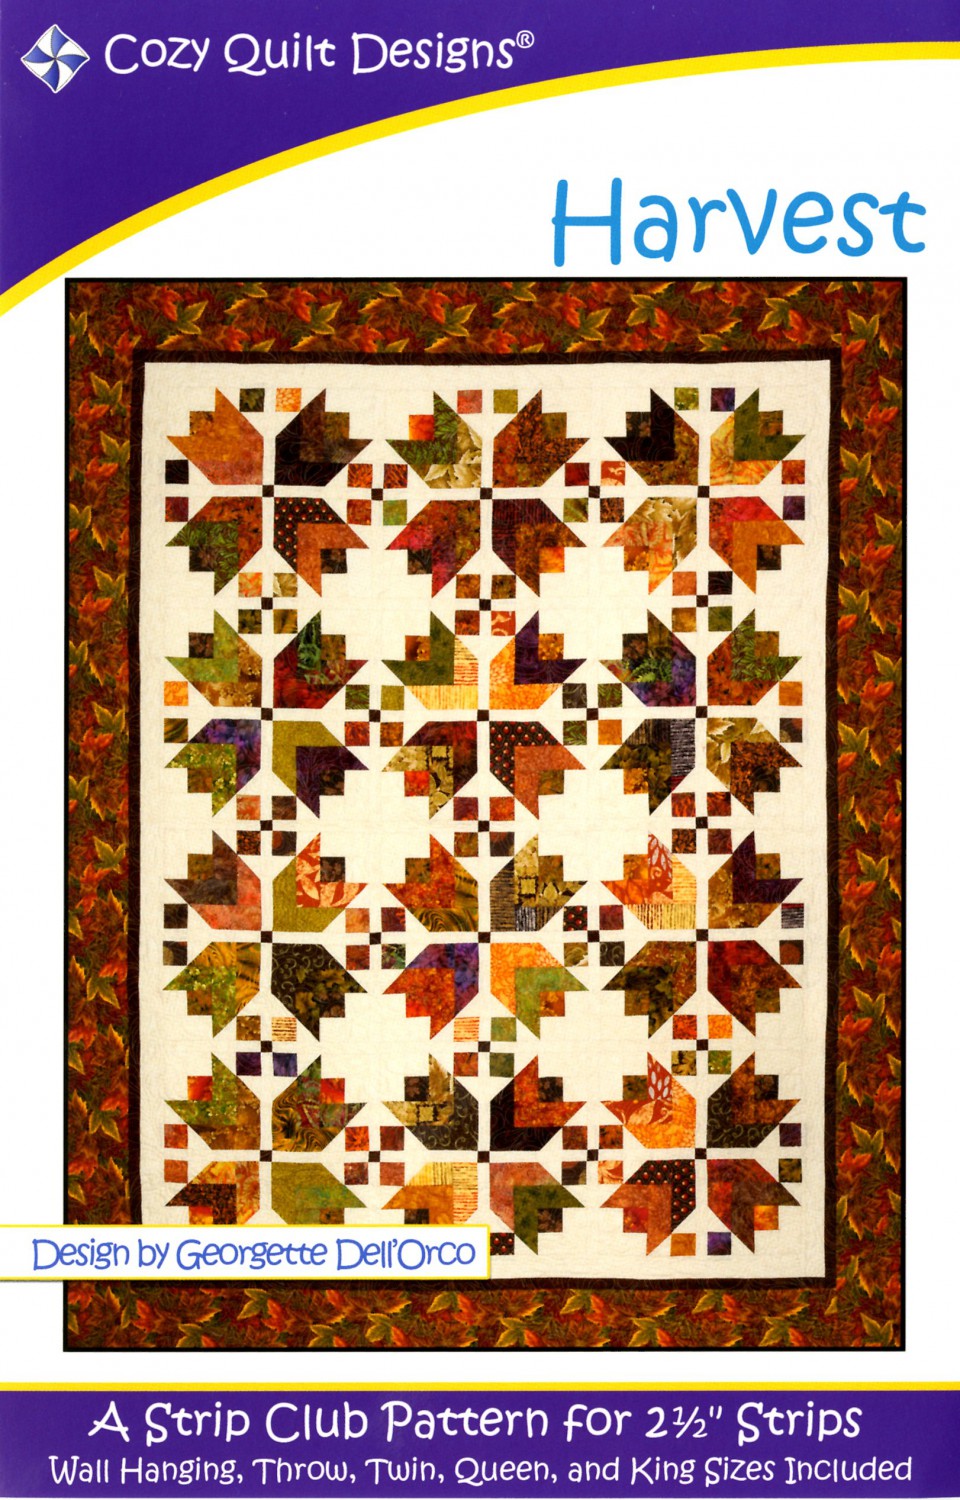 Cozy Quilt Designs Harvest Quilt Pattern